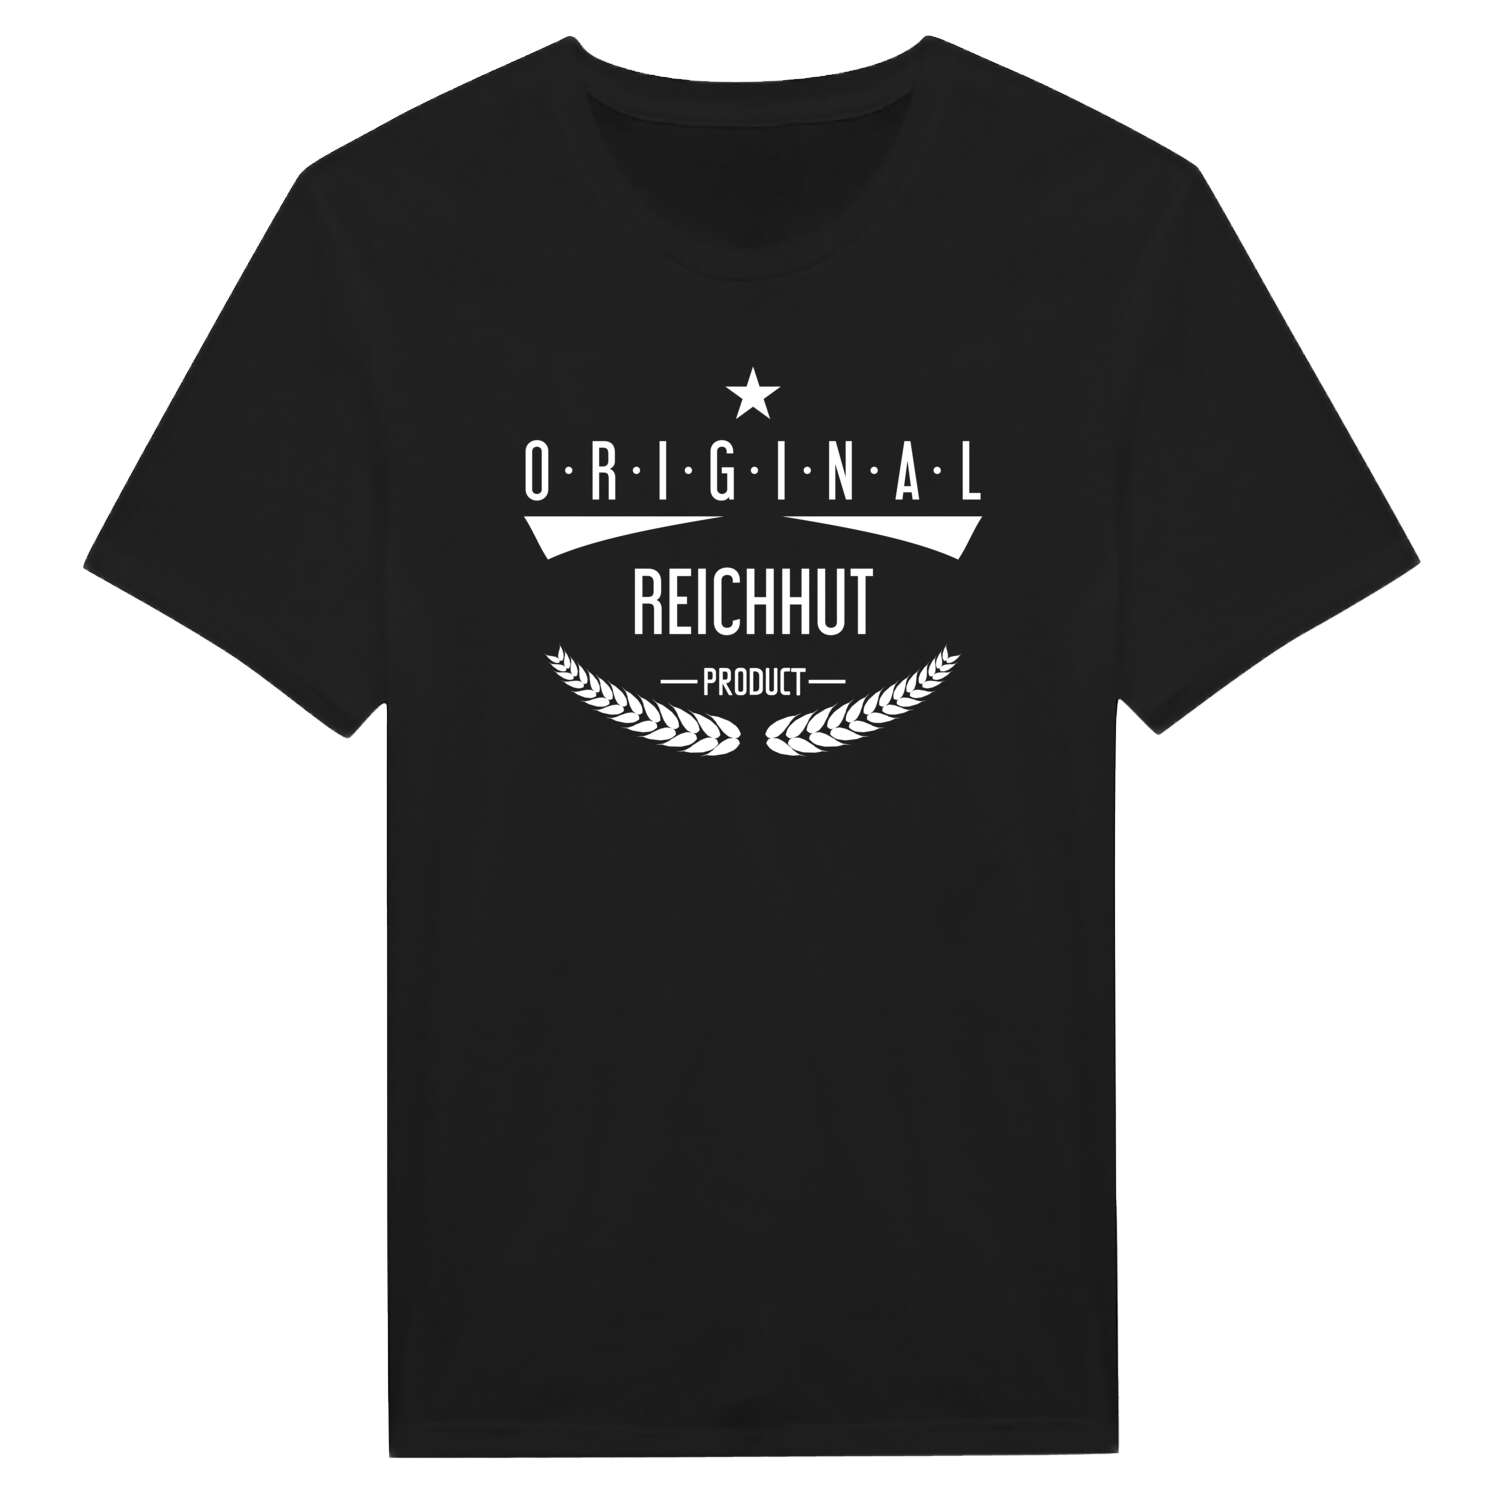 Reichhut T-Shirt »Original Product«